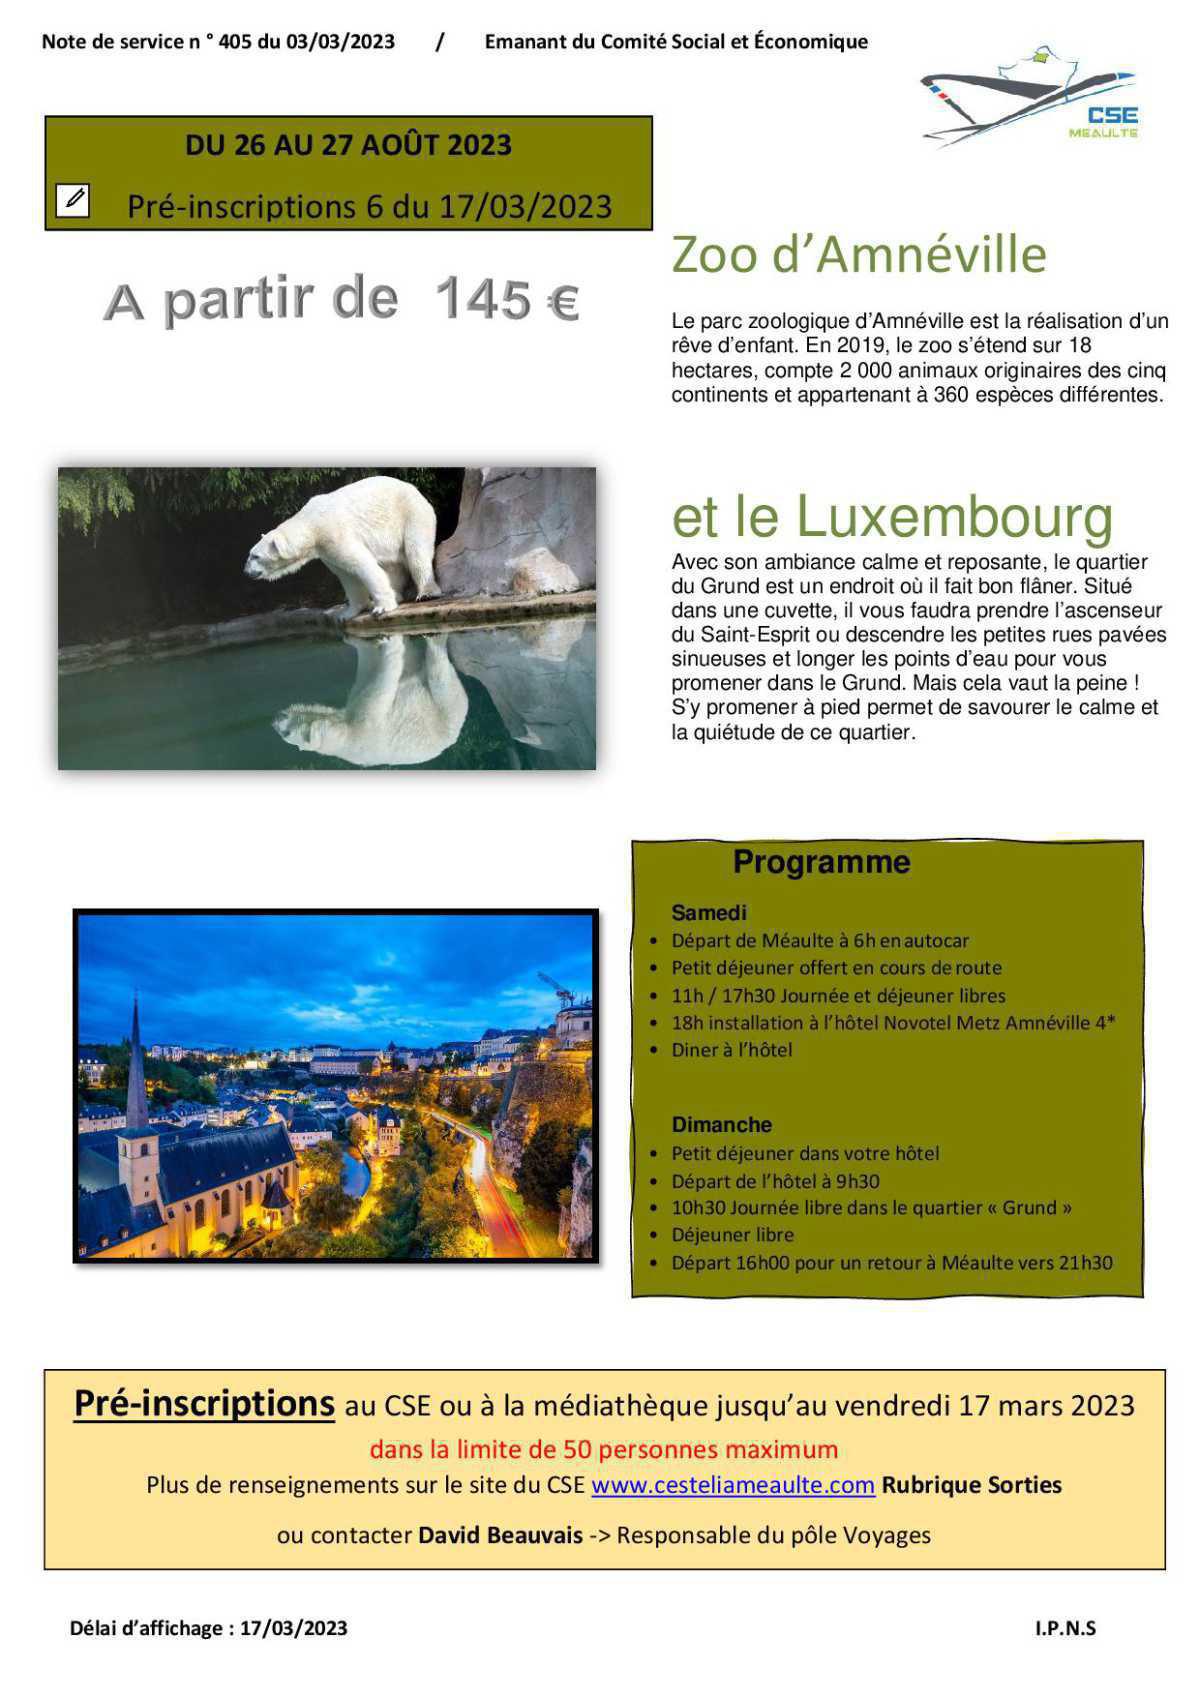 Zoo d'Amnéville le 26-27 août